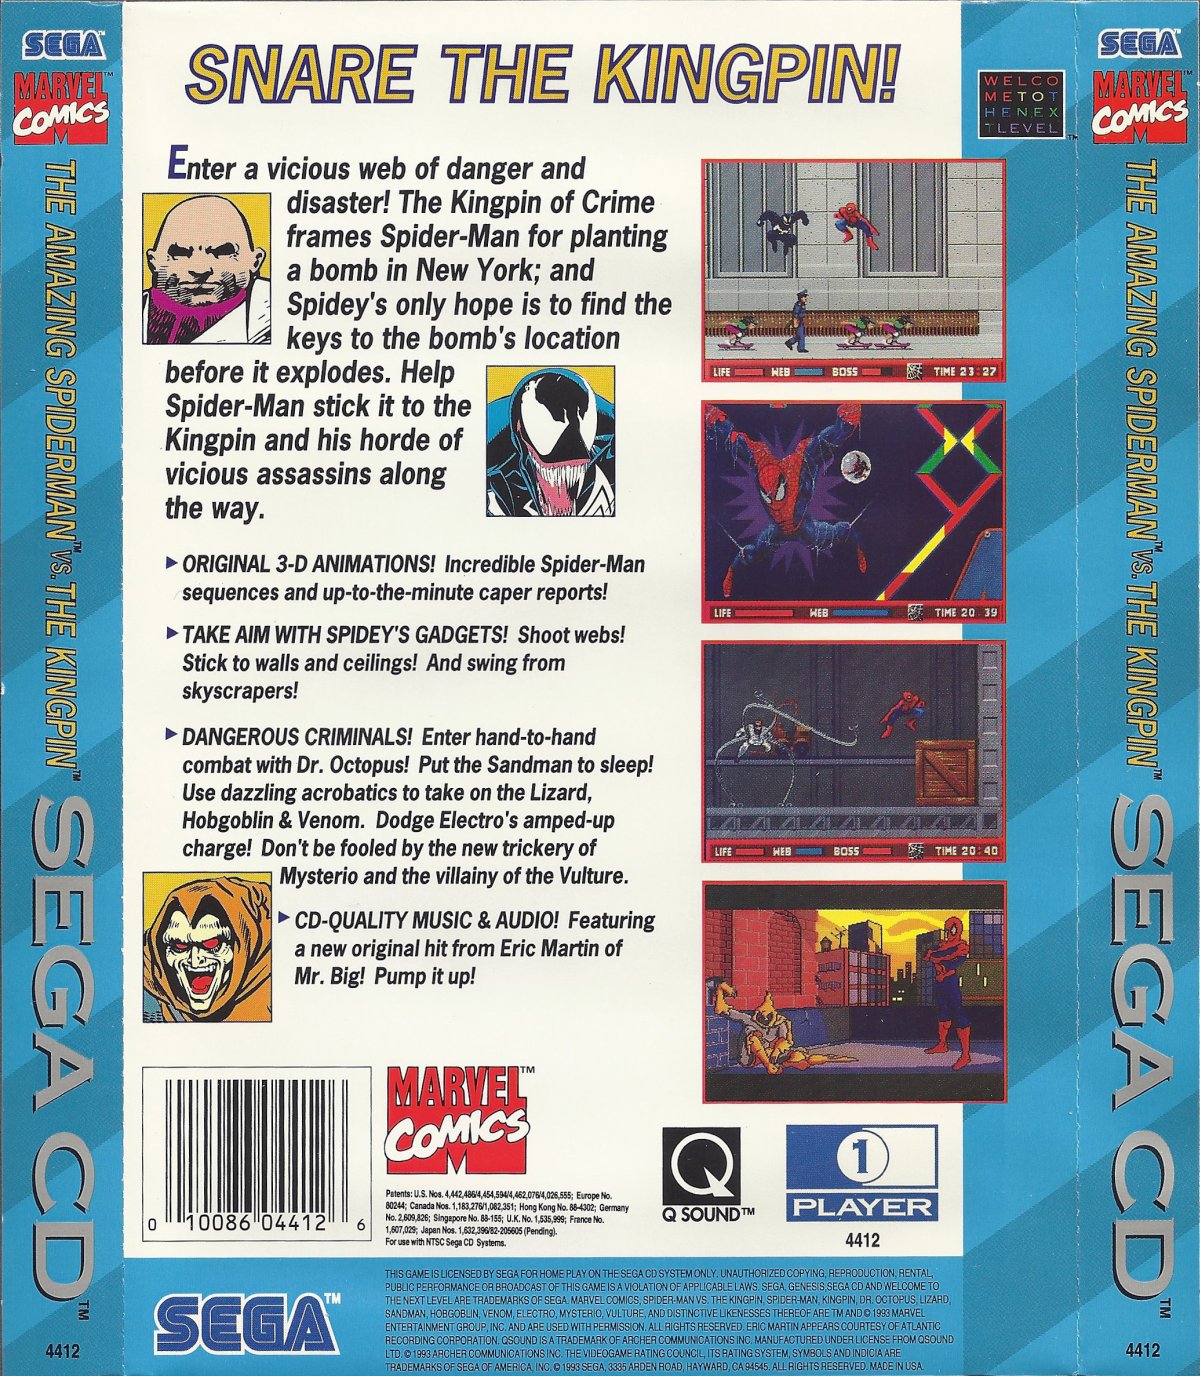 Capa do jogo The Amazing Spider-Man vs. The Kingpin